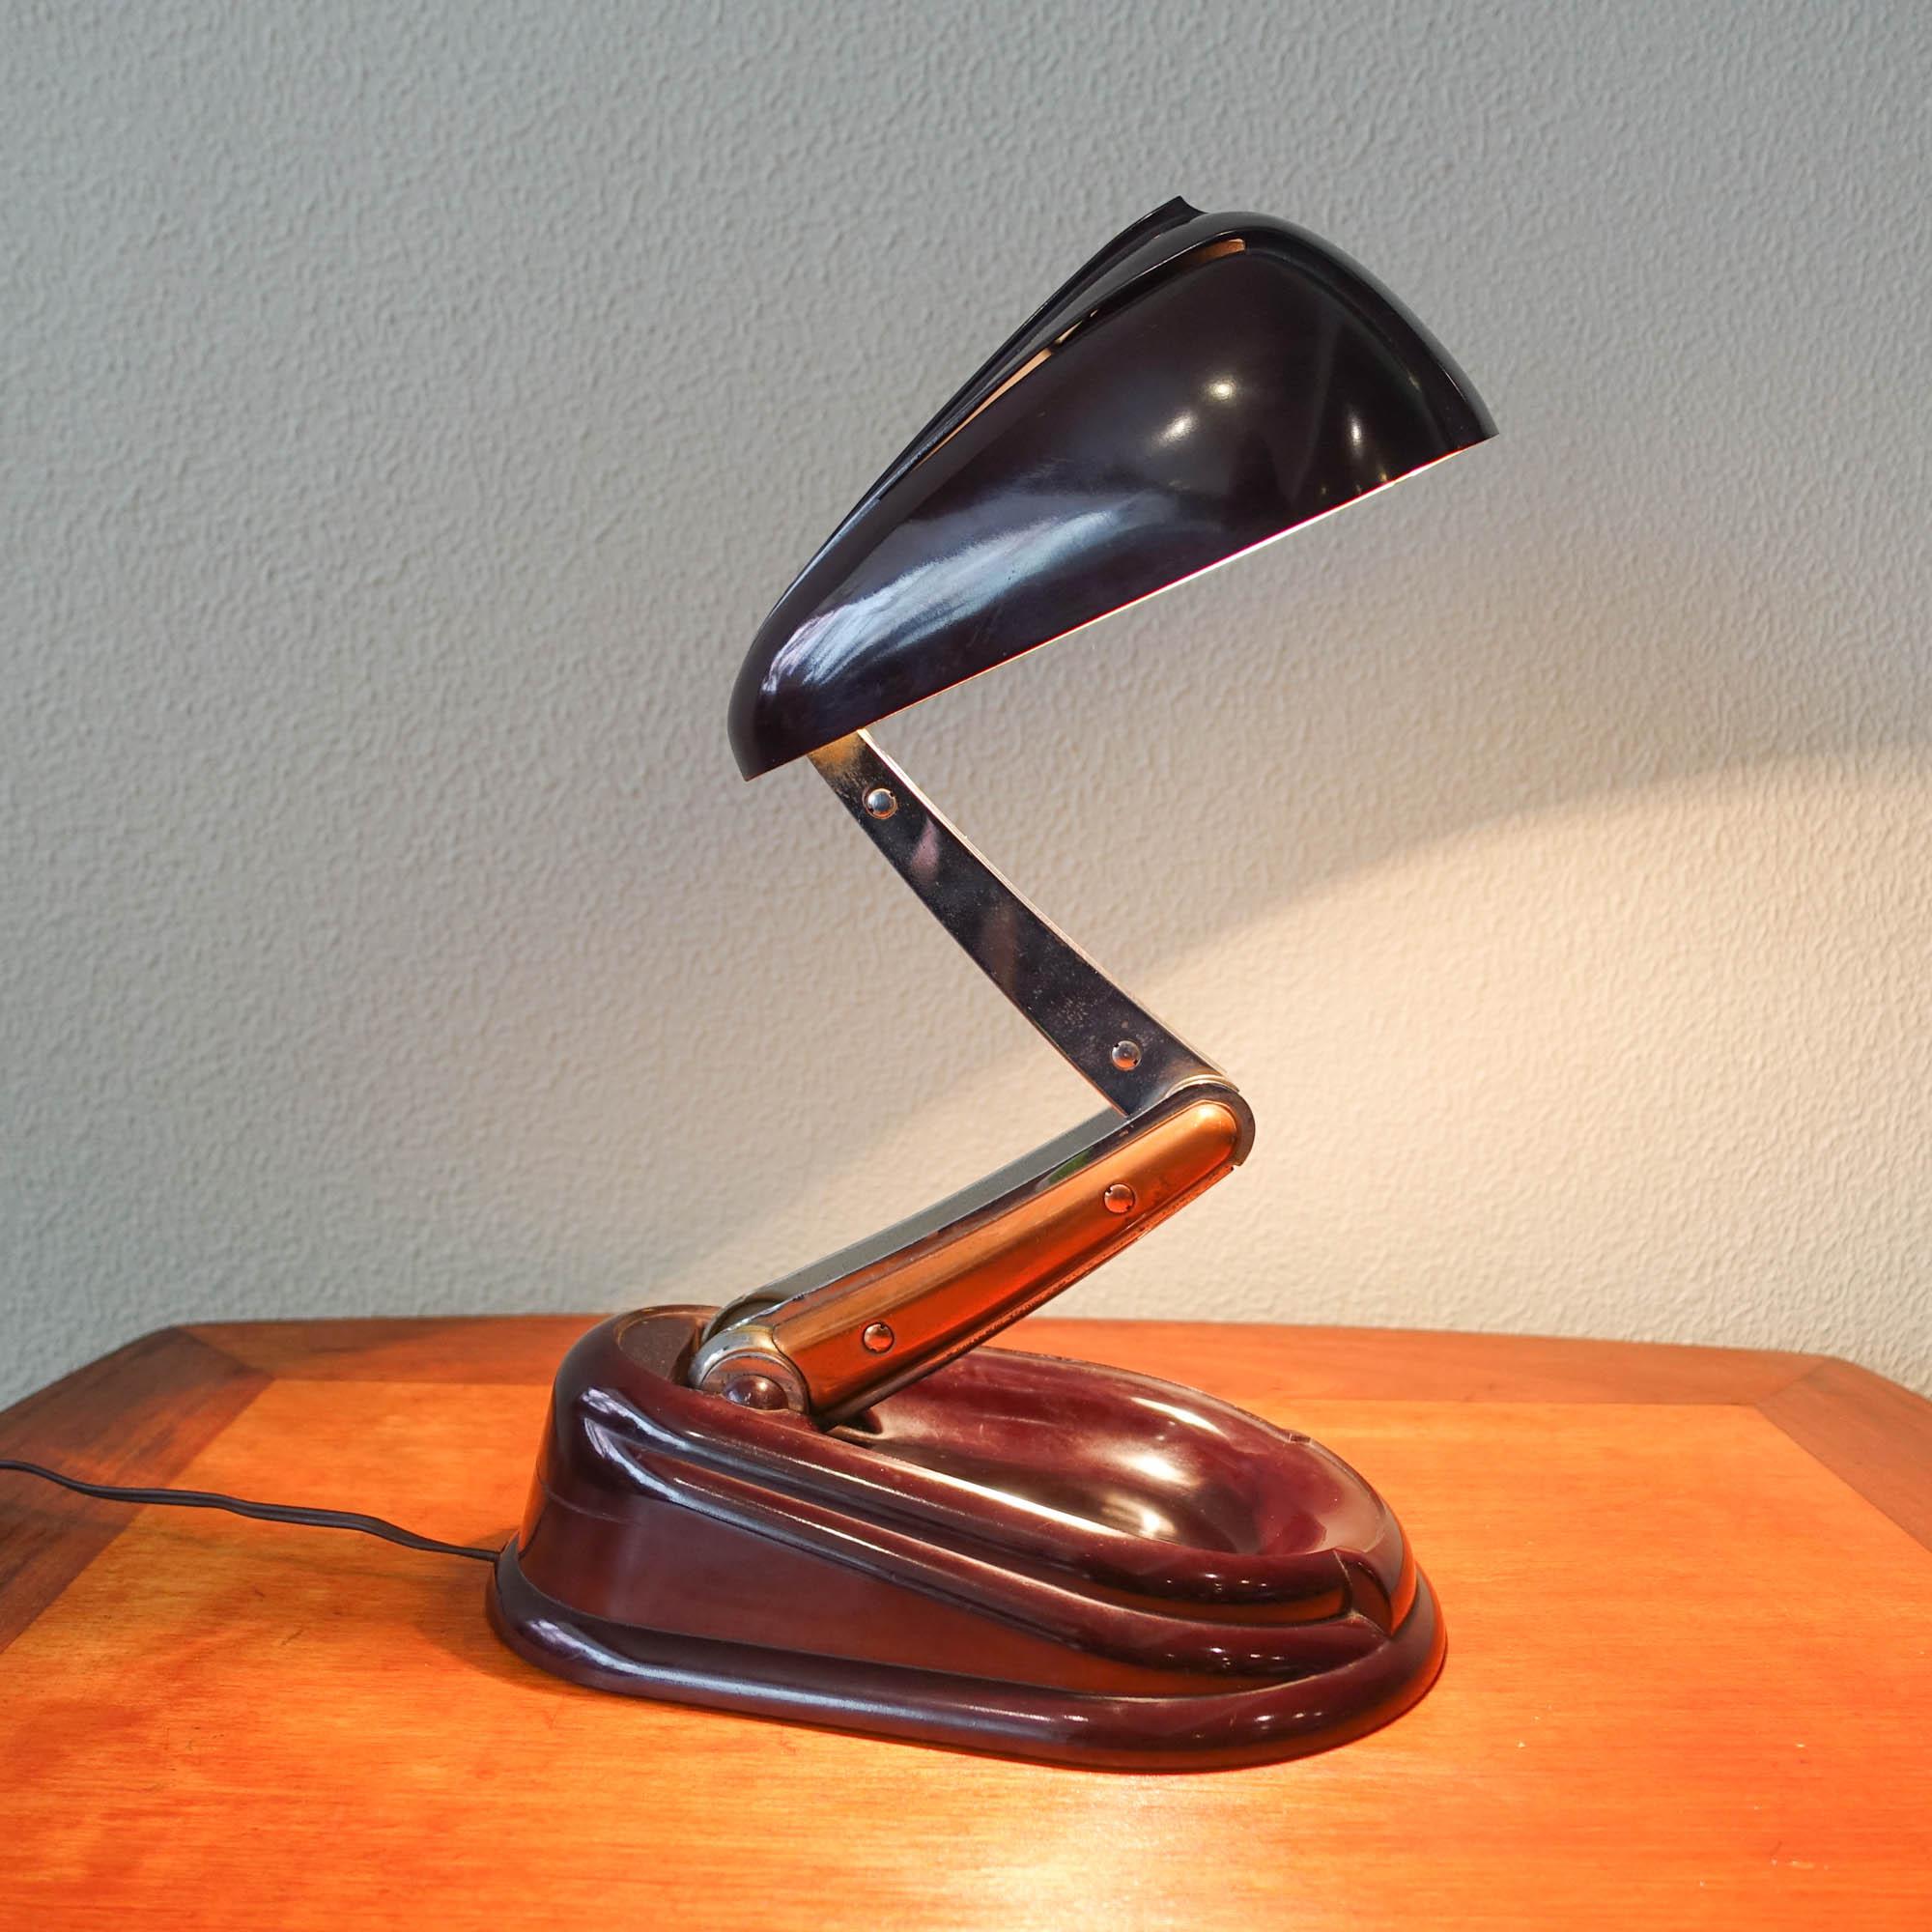 Art Deco Model Bolide Table Lamp by Jumo Brevete for Jumo, 1940s